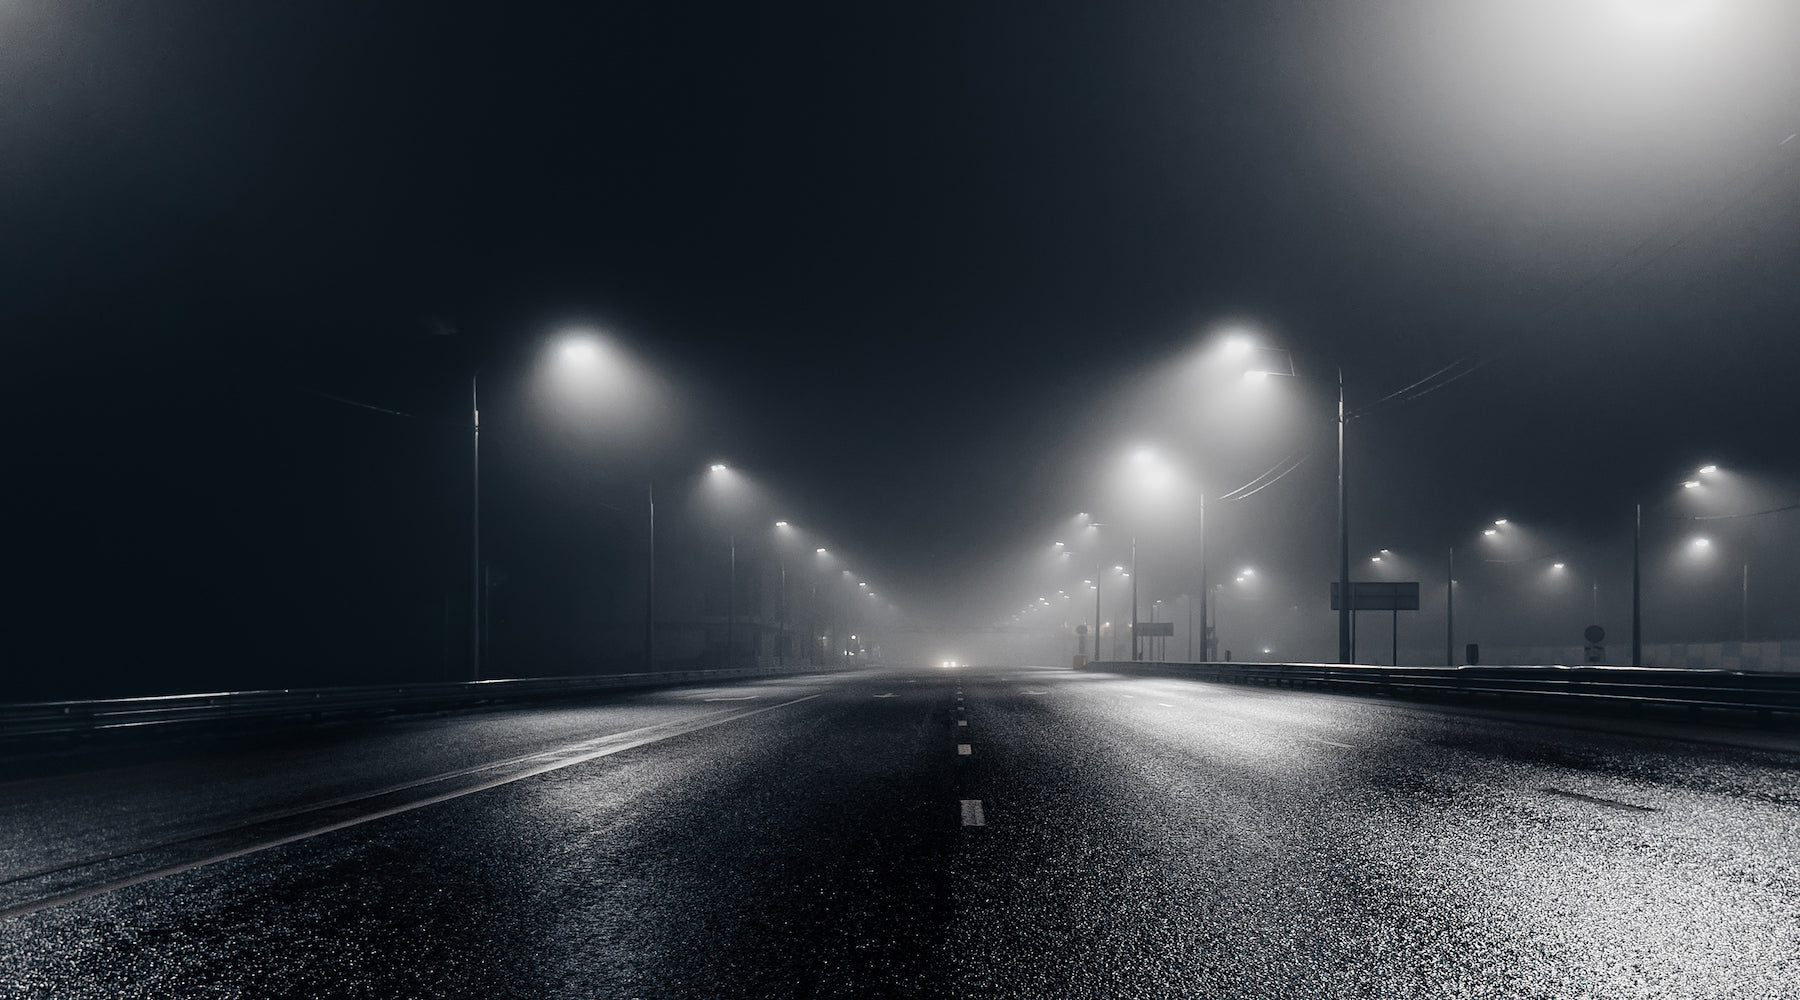 Street lighting shown illuminating foggy and misty roadway at night